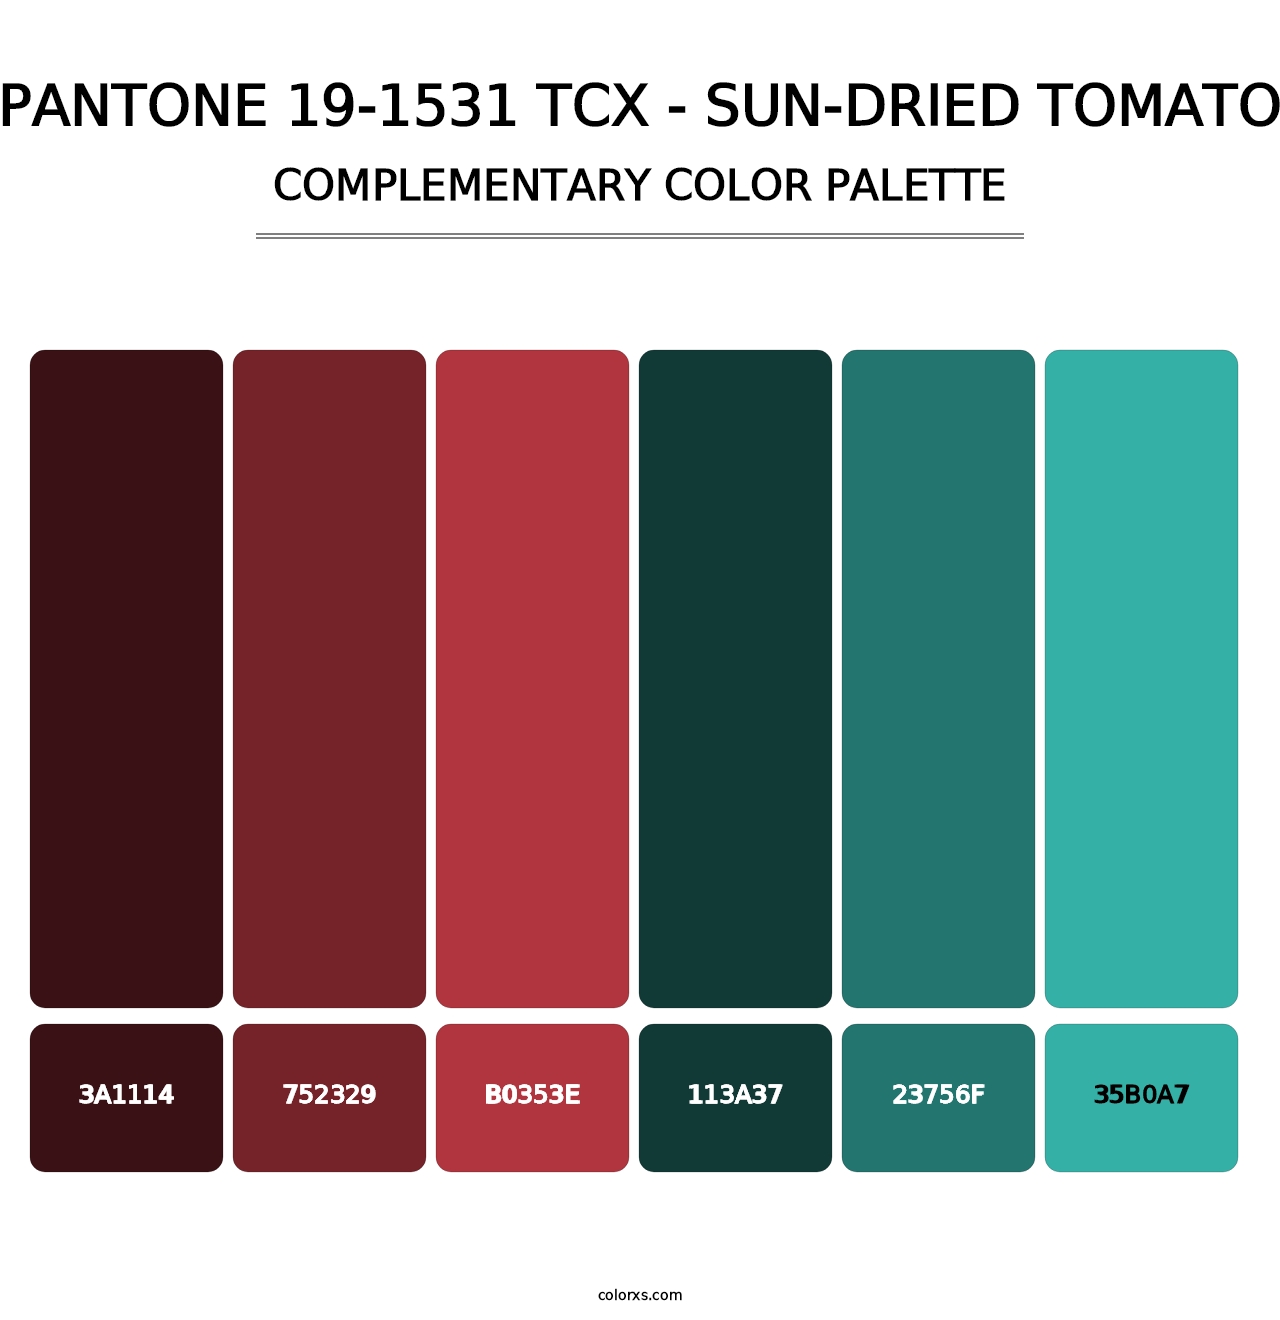 PANTONE 19-1531 TCX - Sun-Dried Tomato - Complementary Color Palette